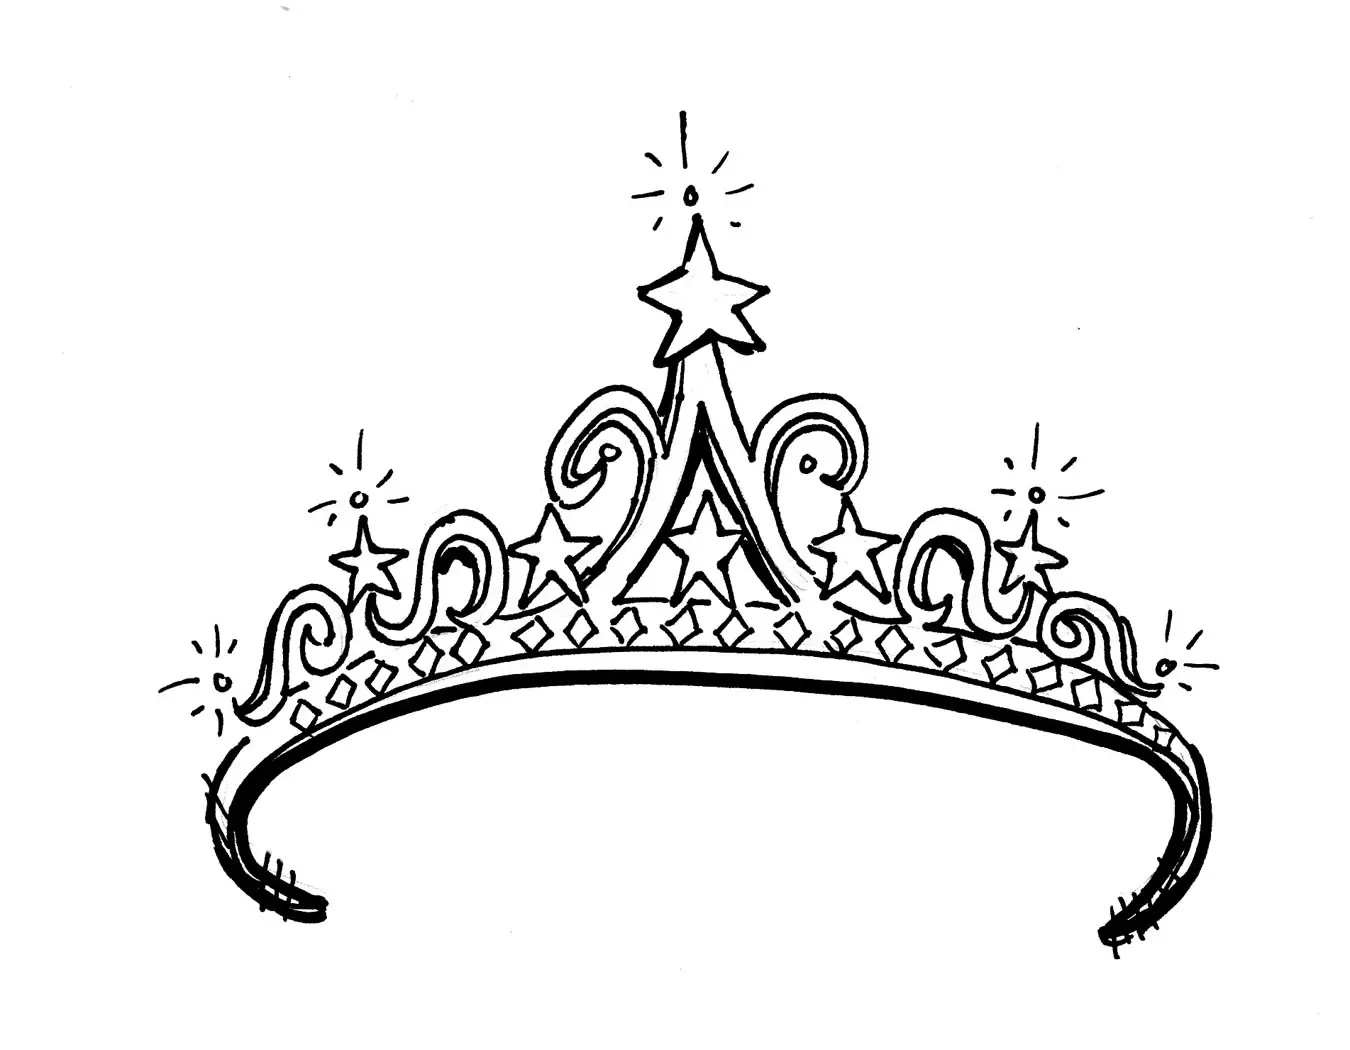 coronas de princesas para imprimir